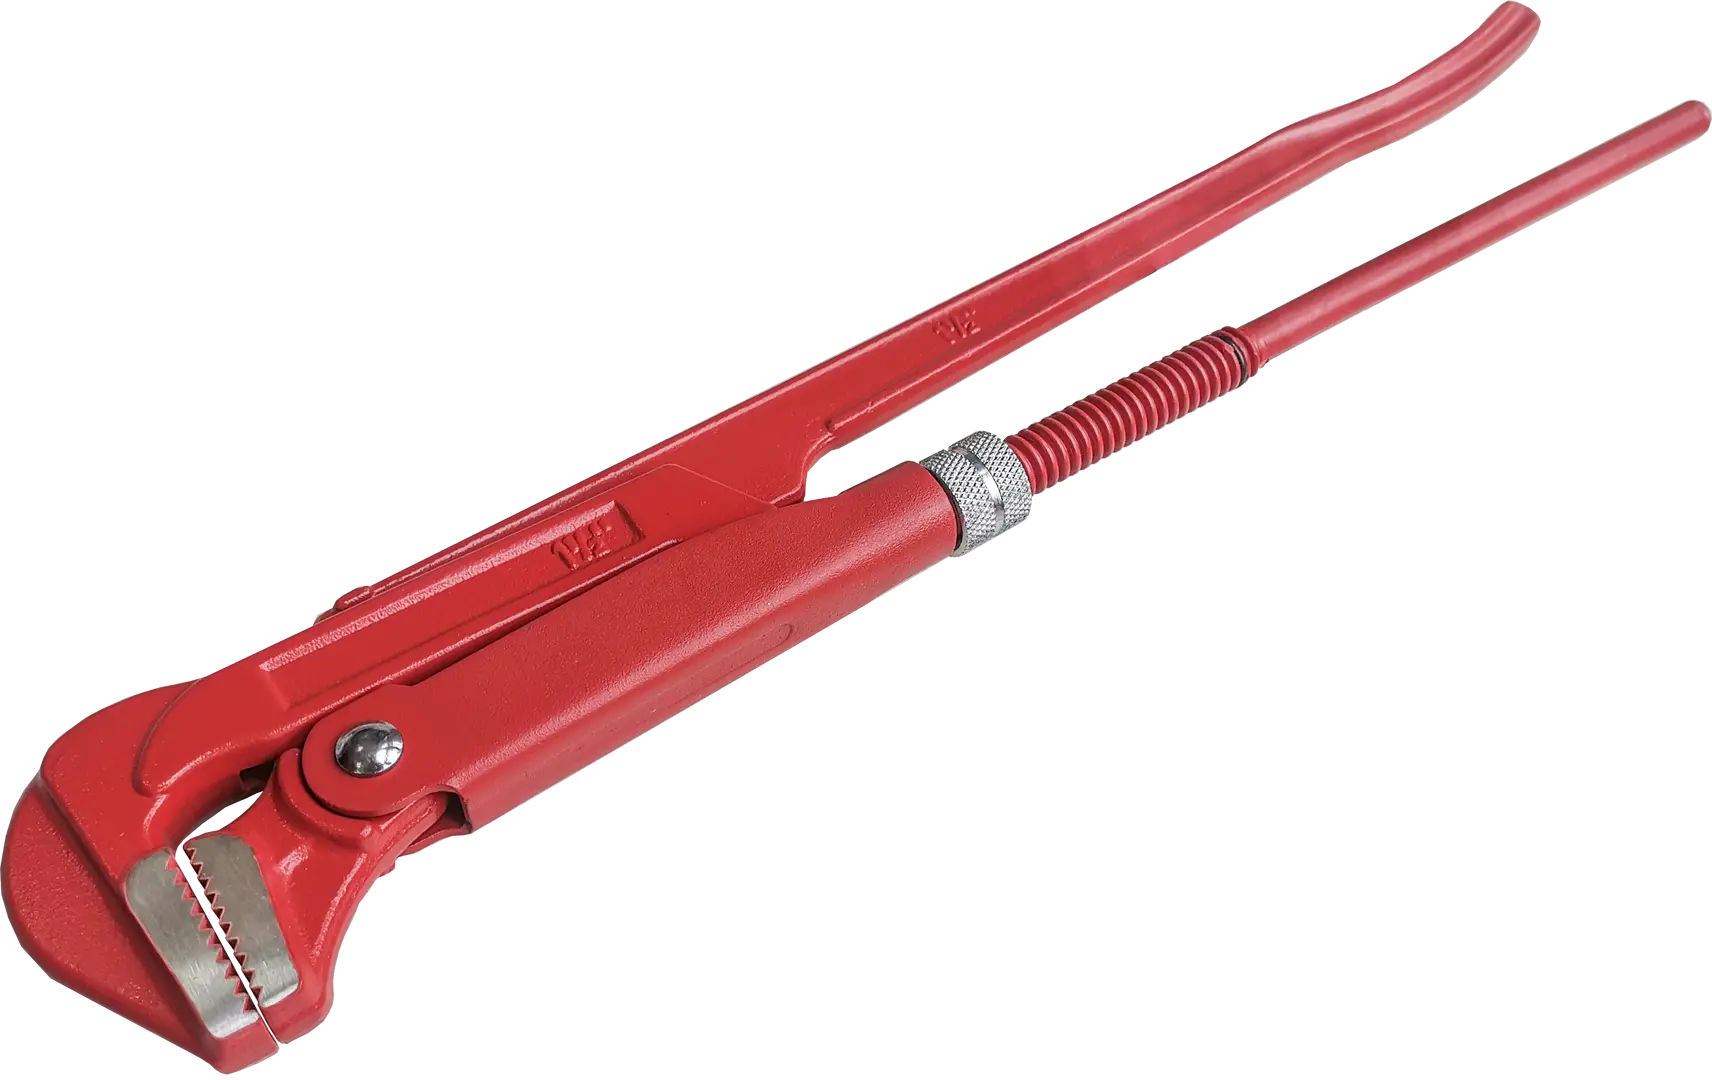 Ключ трубный газовый рычажный КТР-2 захват 40 мм, длина 420 мм трубный ключ с прямыми губками сибин 2 2730 2 1 5 445 мм